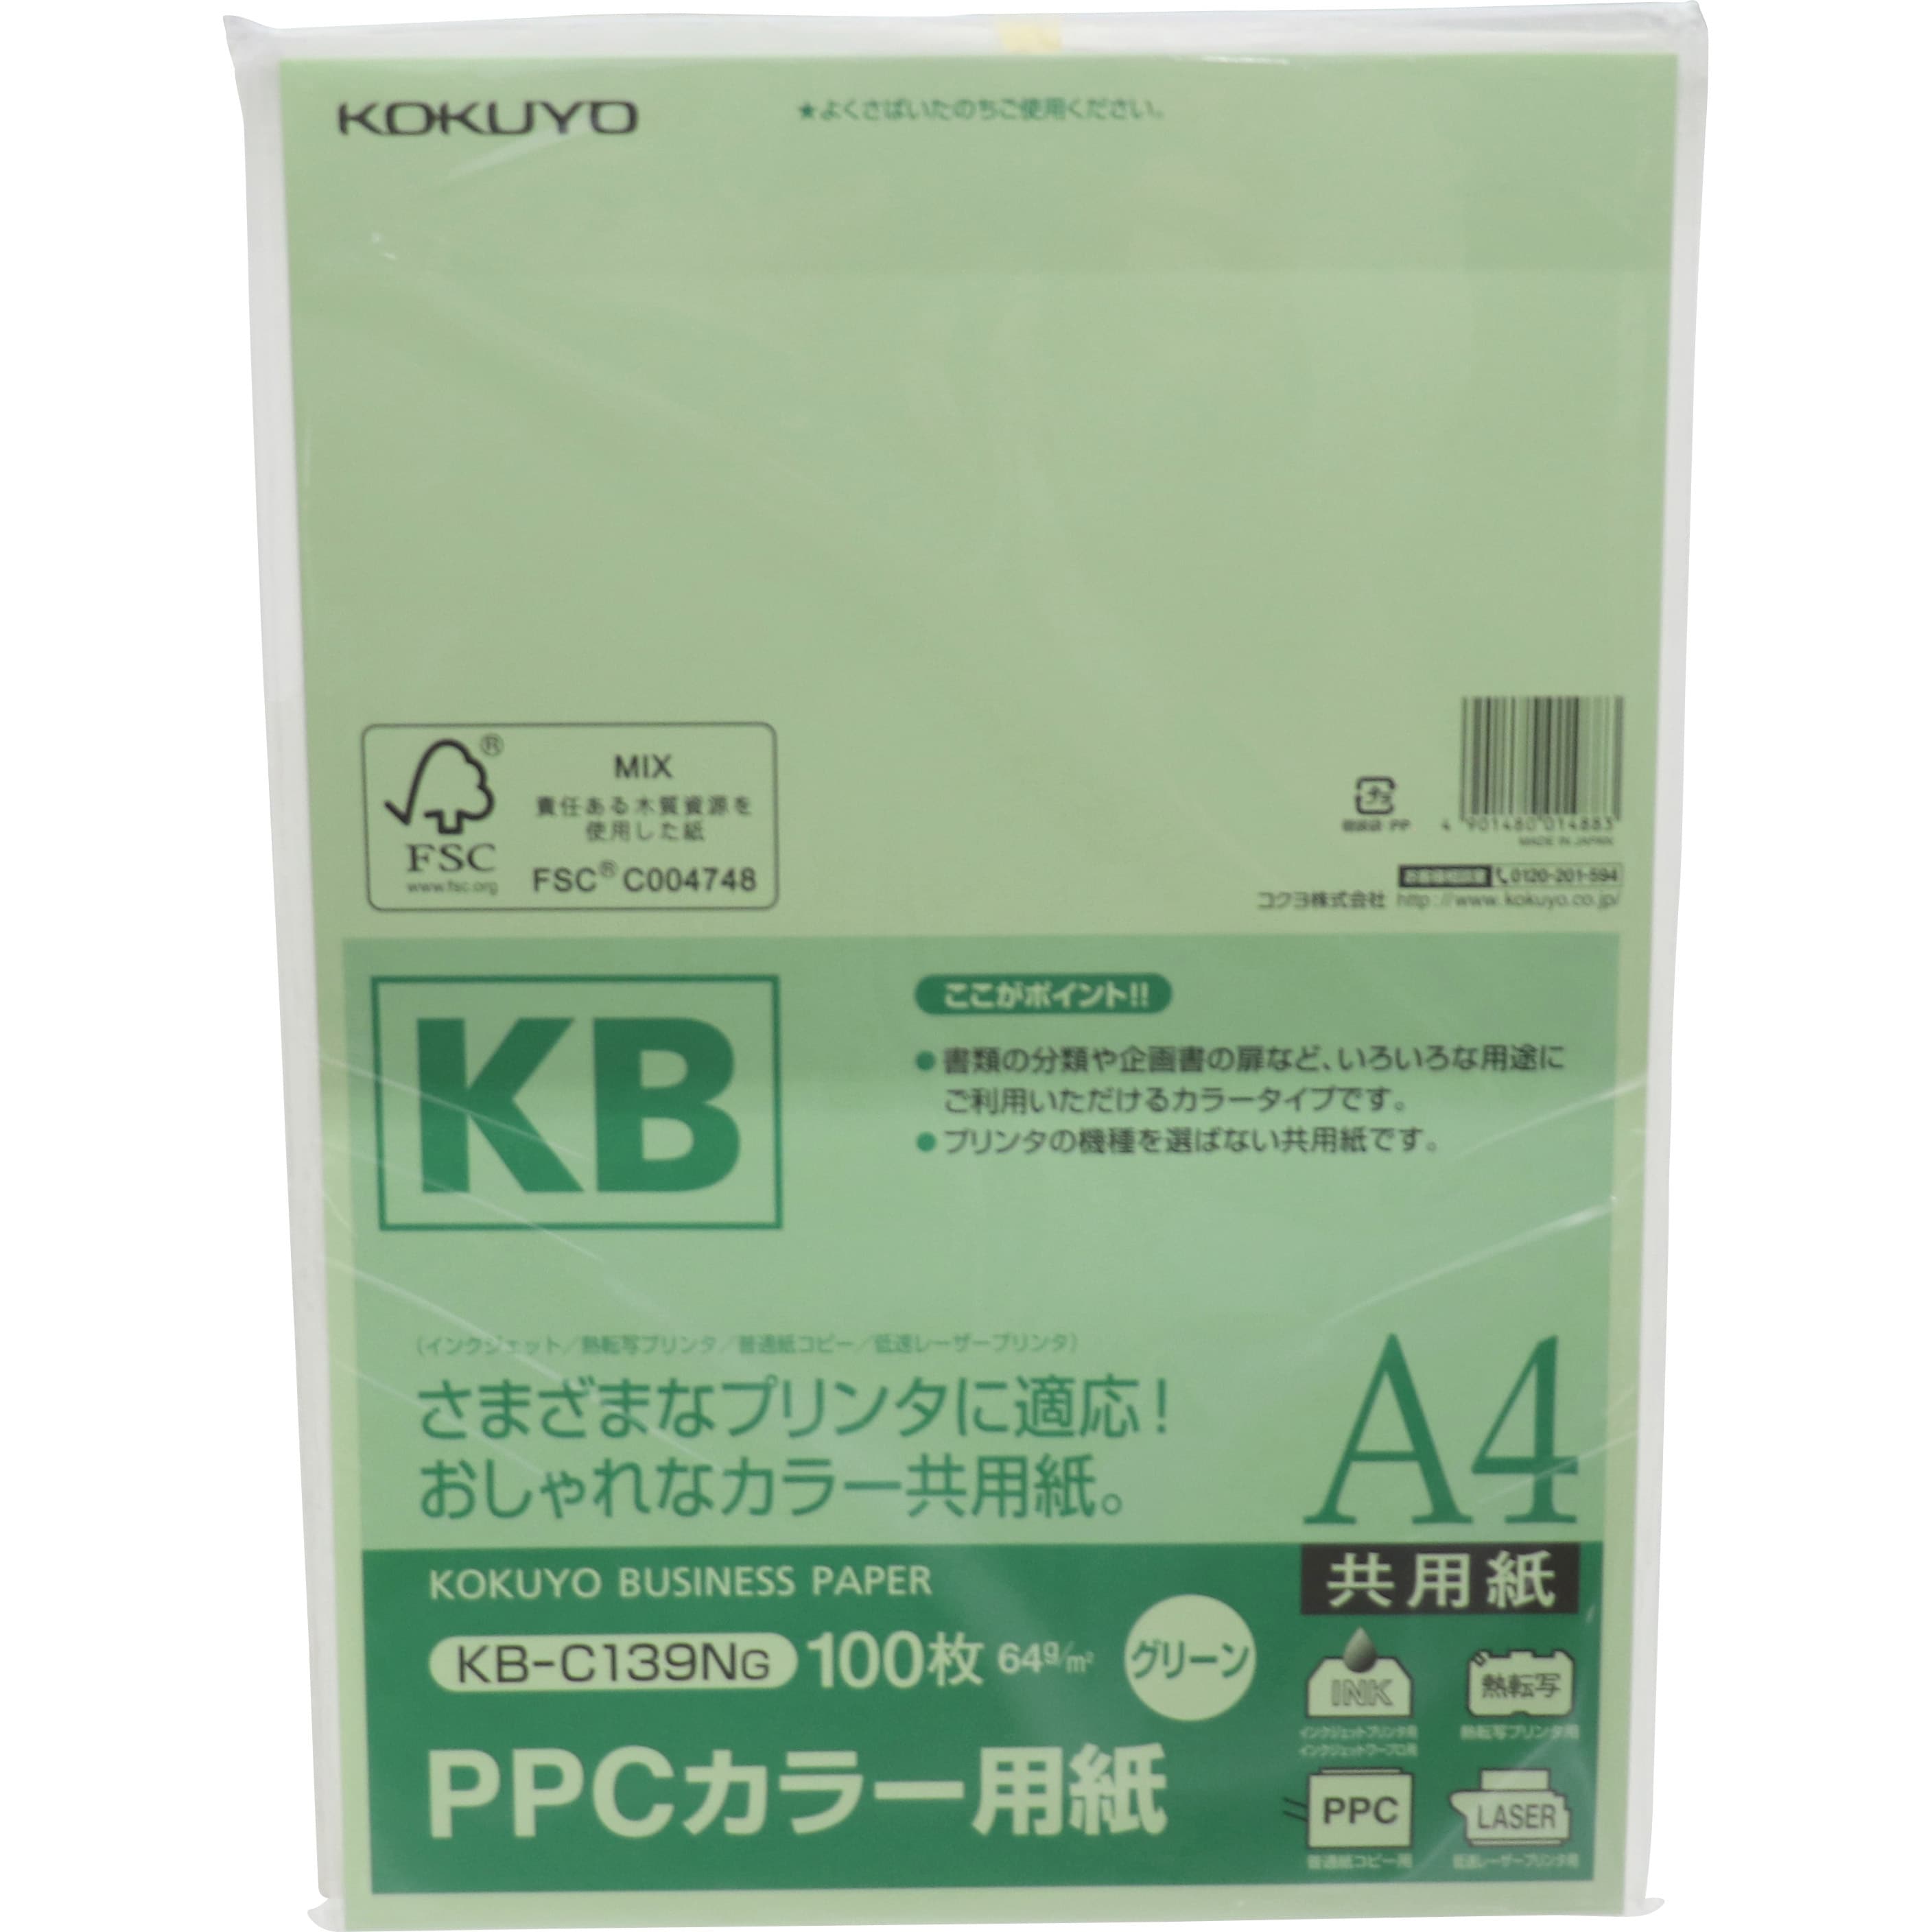 KB-C139NG PPCカラー用紙 共用紙 森林管理認証 1袋(100枚) コクヨ